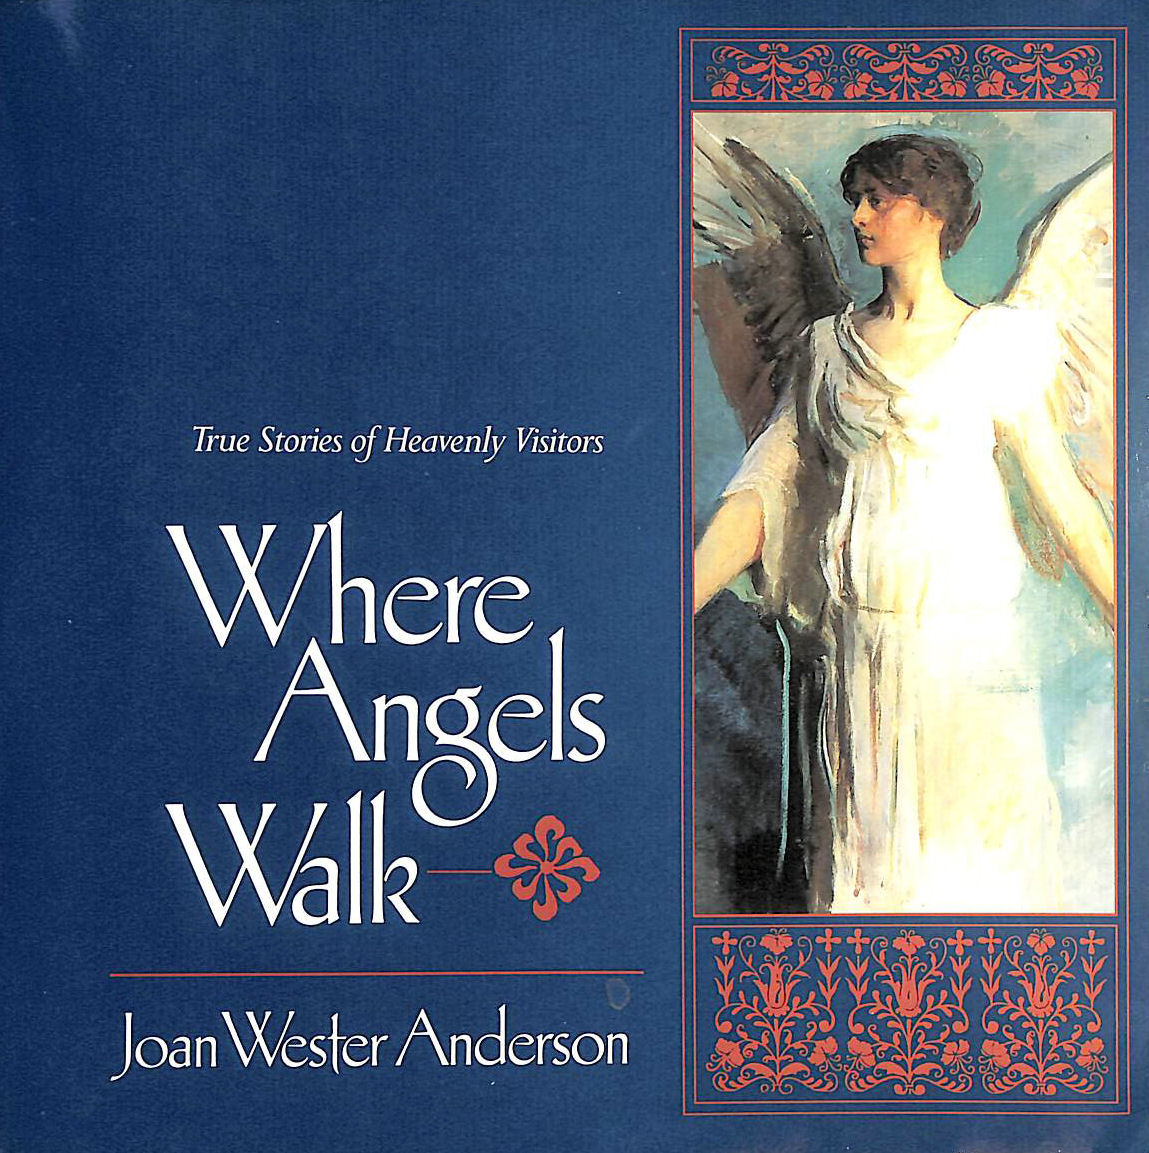 JOAN WESTER ANDERSON - Where Angels Walk: True Stories of Heavenly Visitors